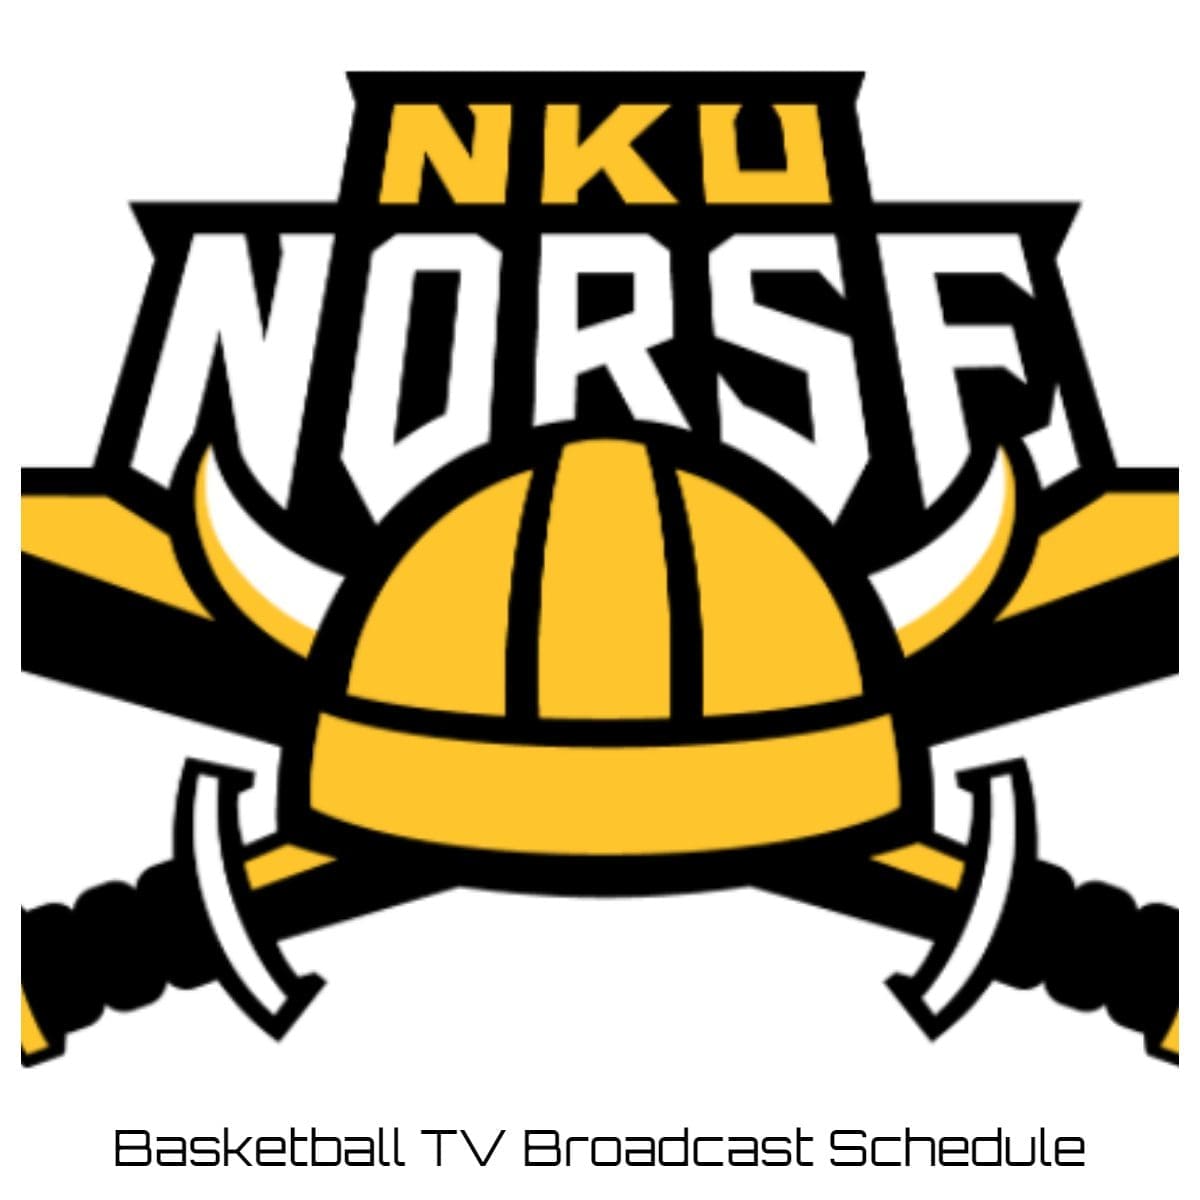 Northern Kentucky Norse Basketball TV Broadcast Schedule